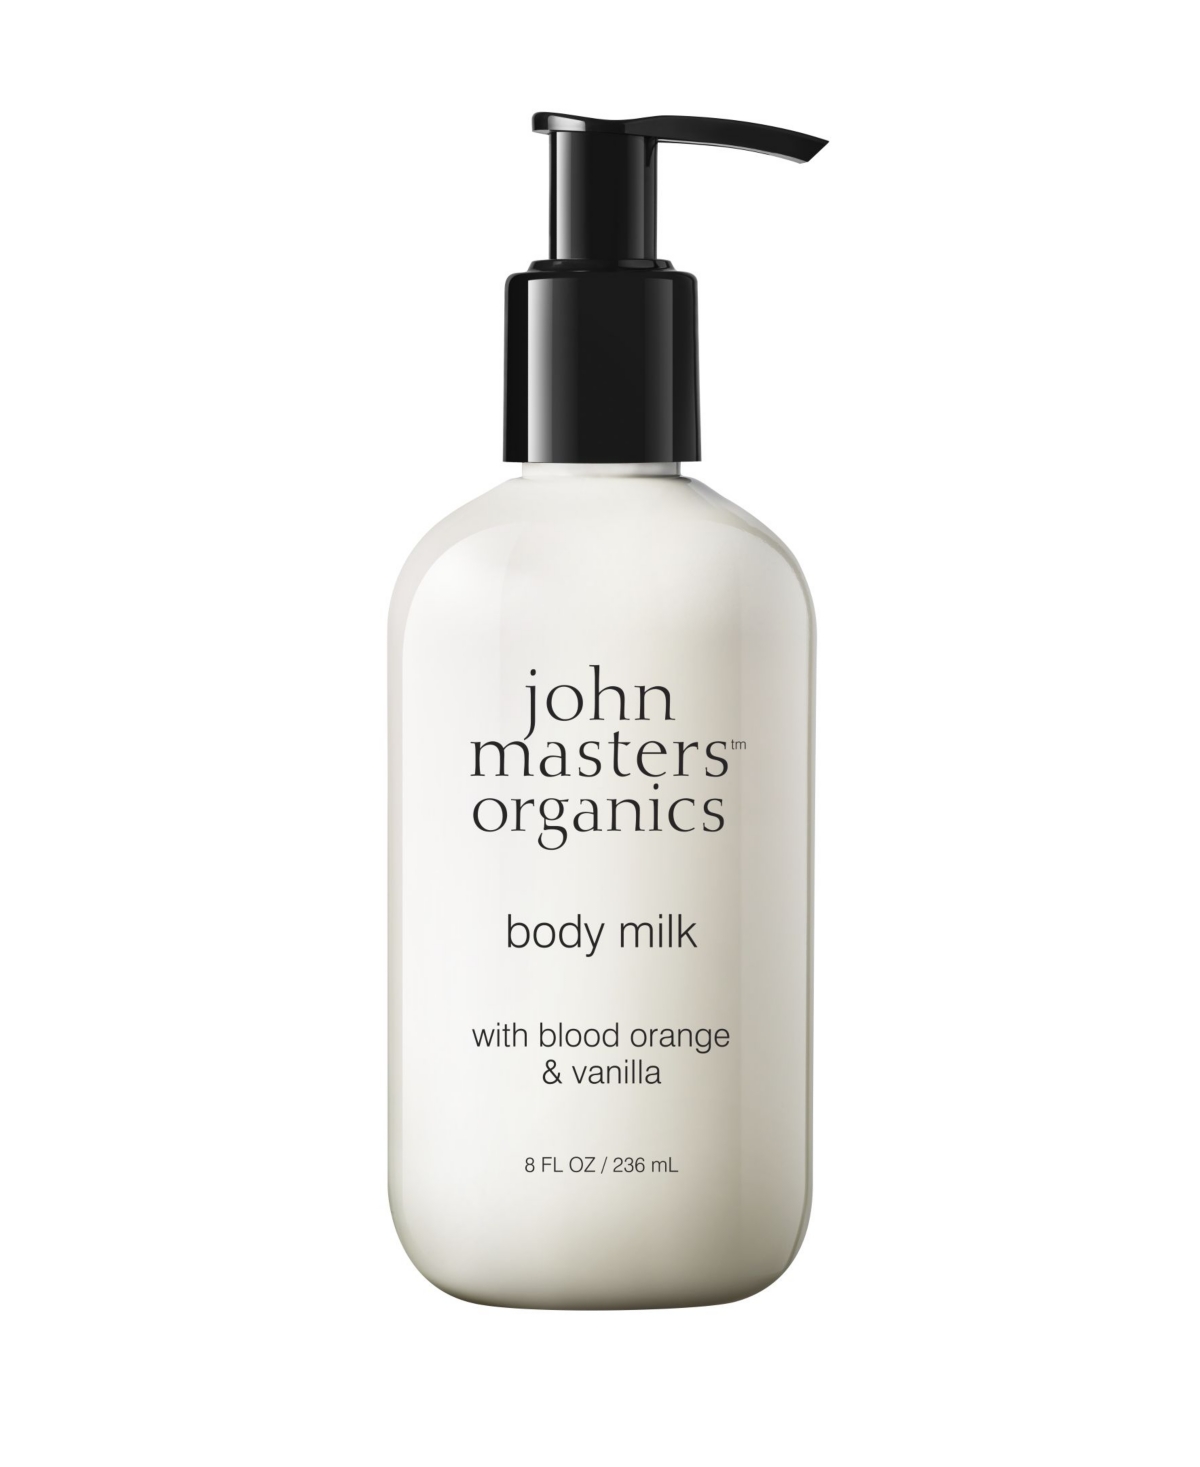 John Masters Organics Body Milk With Blood Orange And Vanilla, 8 Fl oz